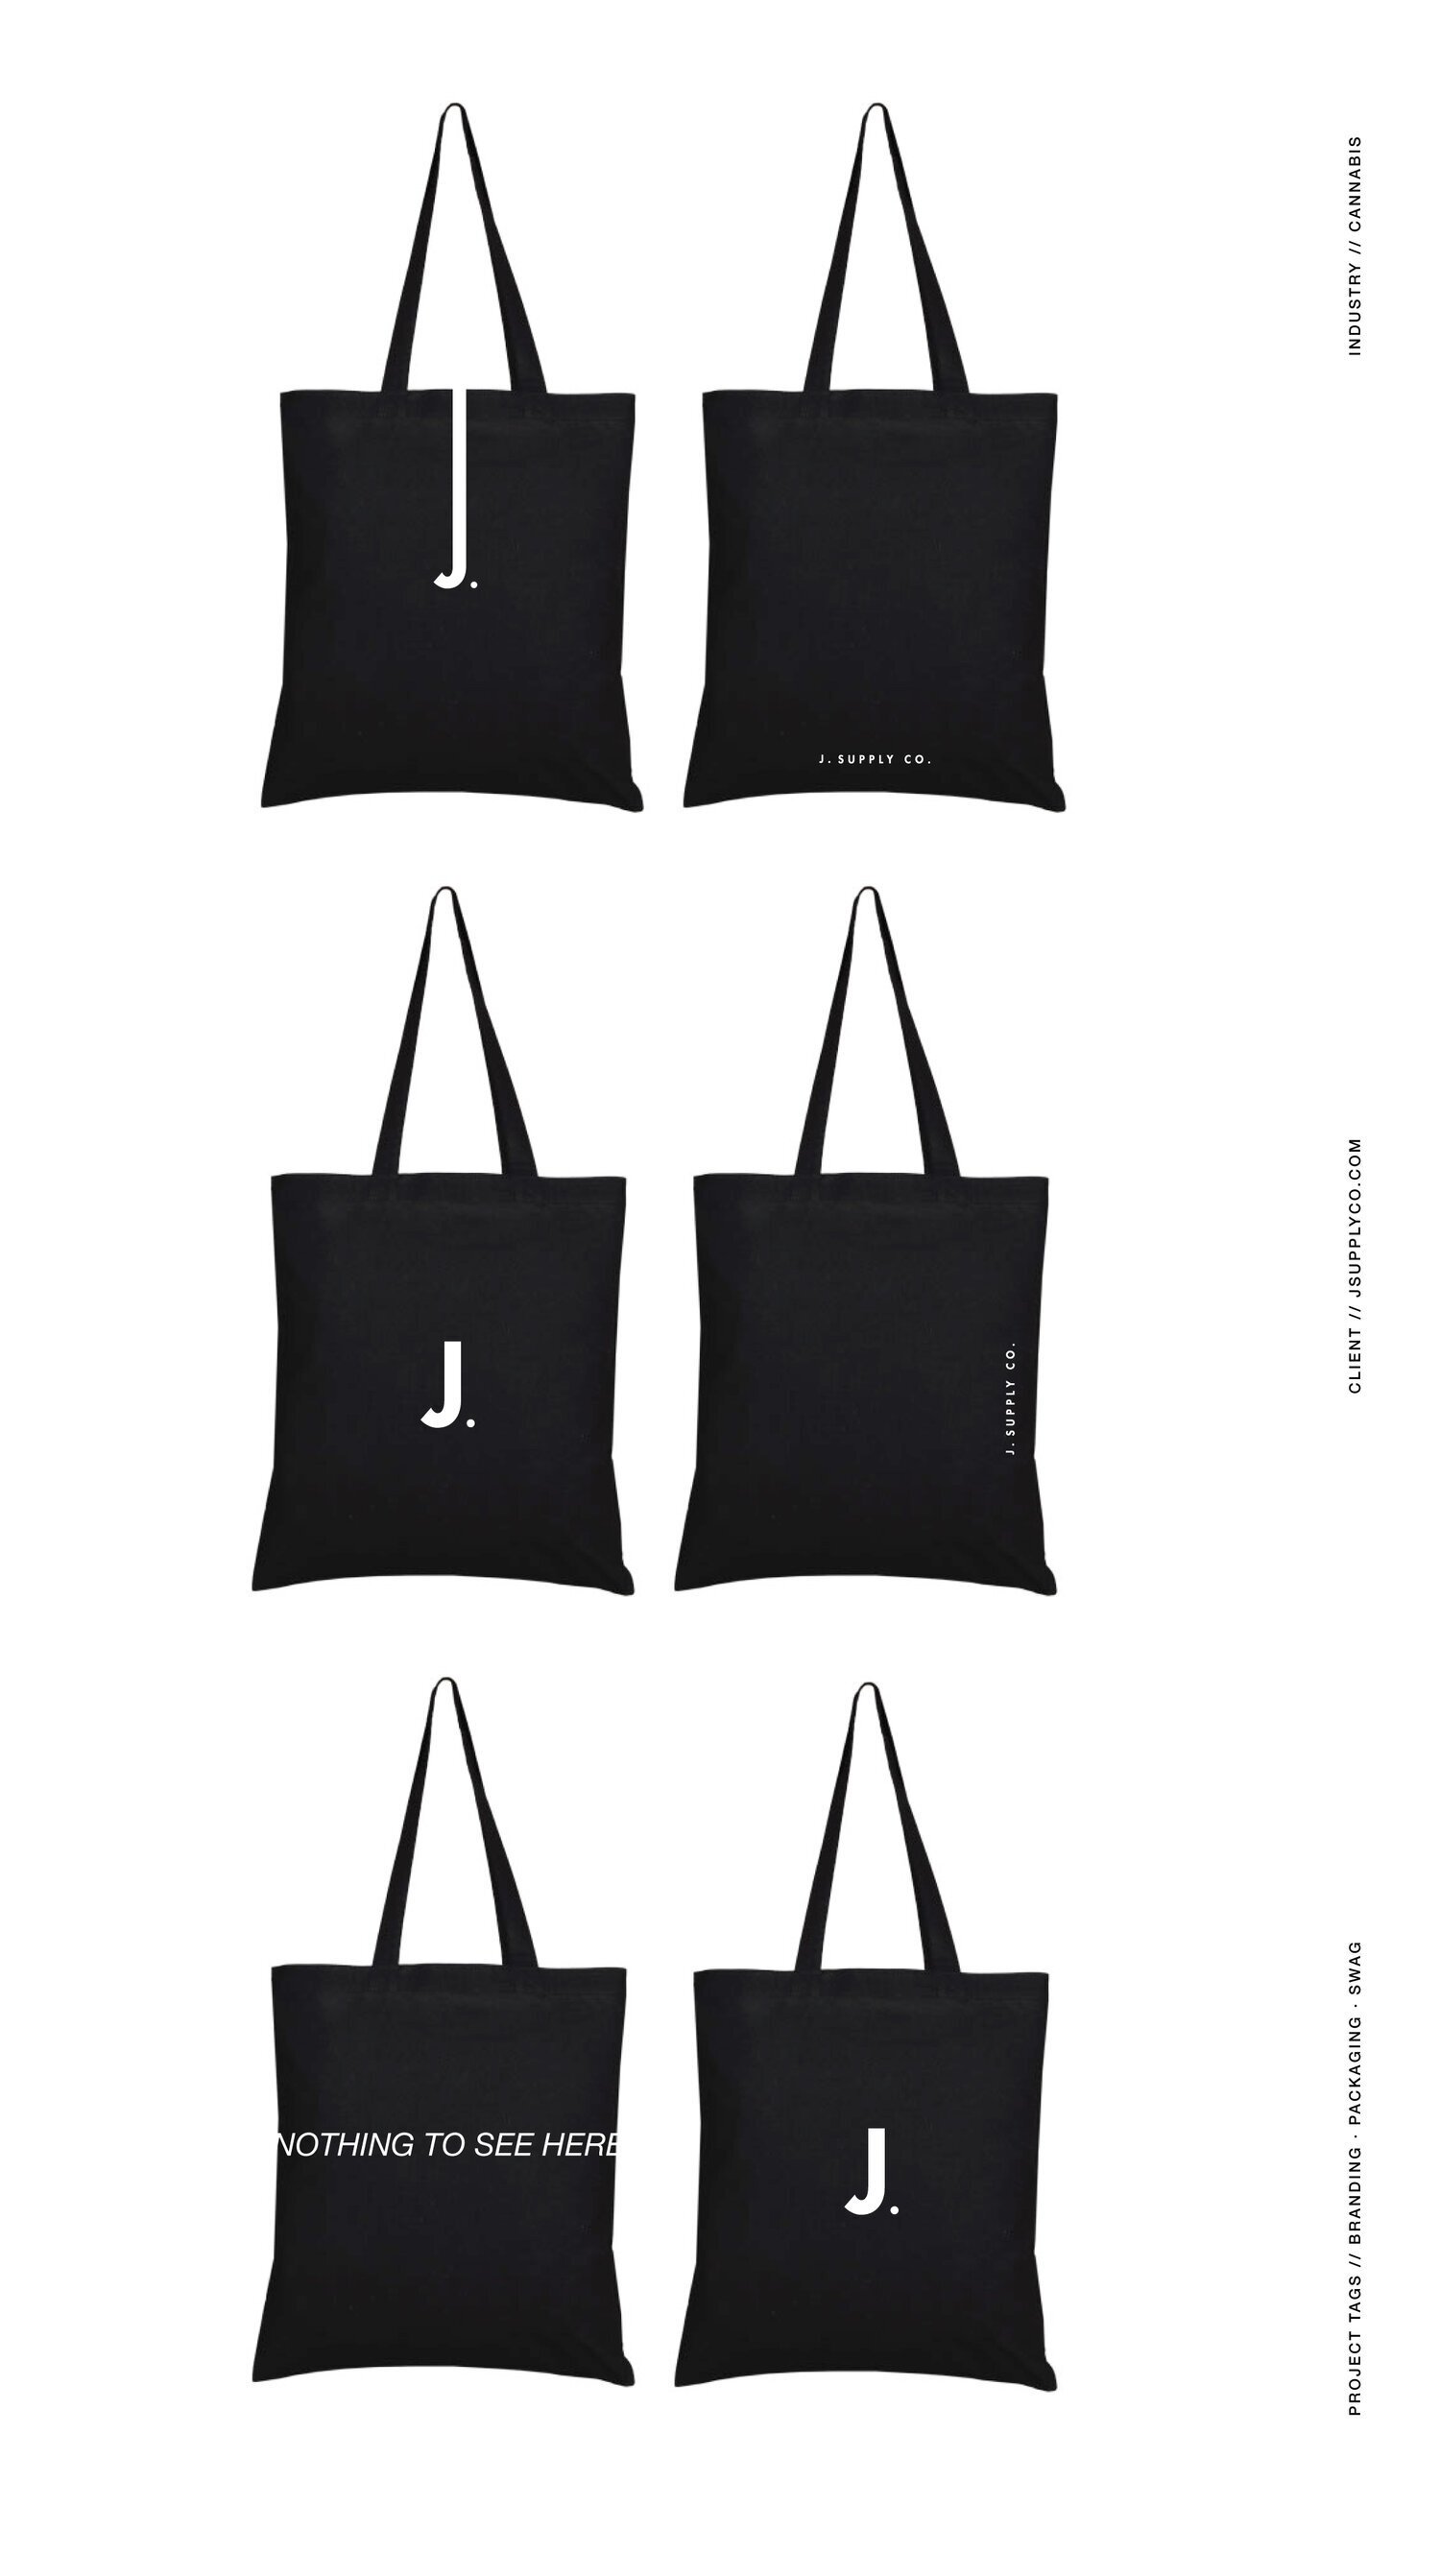 freelance-graphic-designer-tote-bag-nyc.jpg